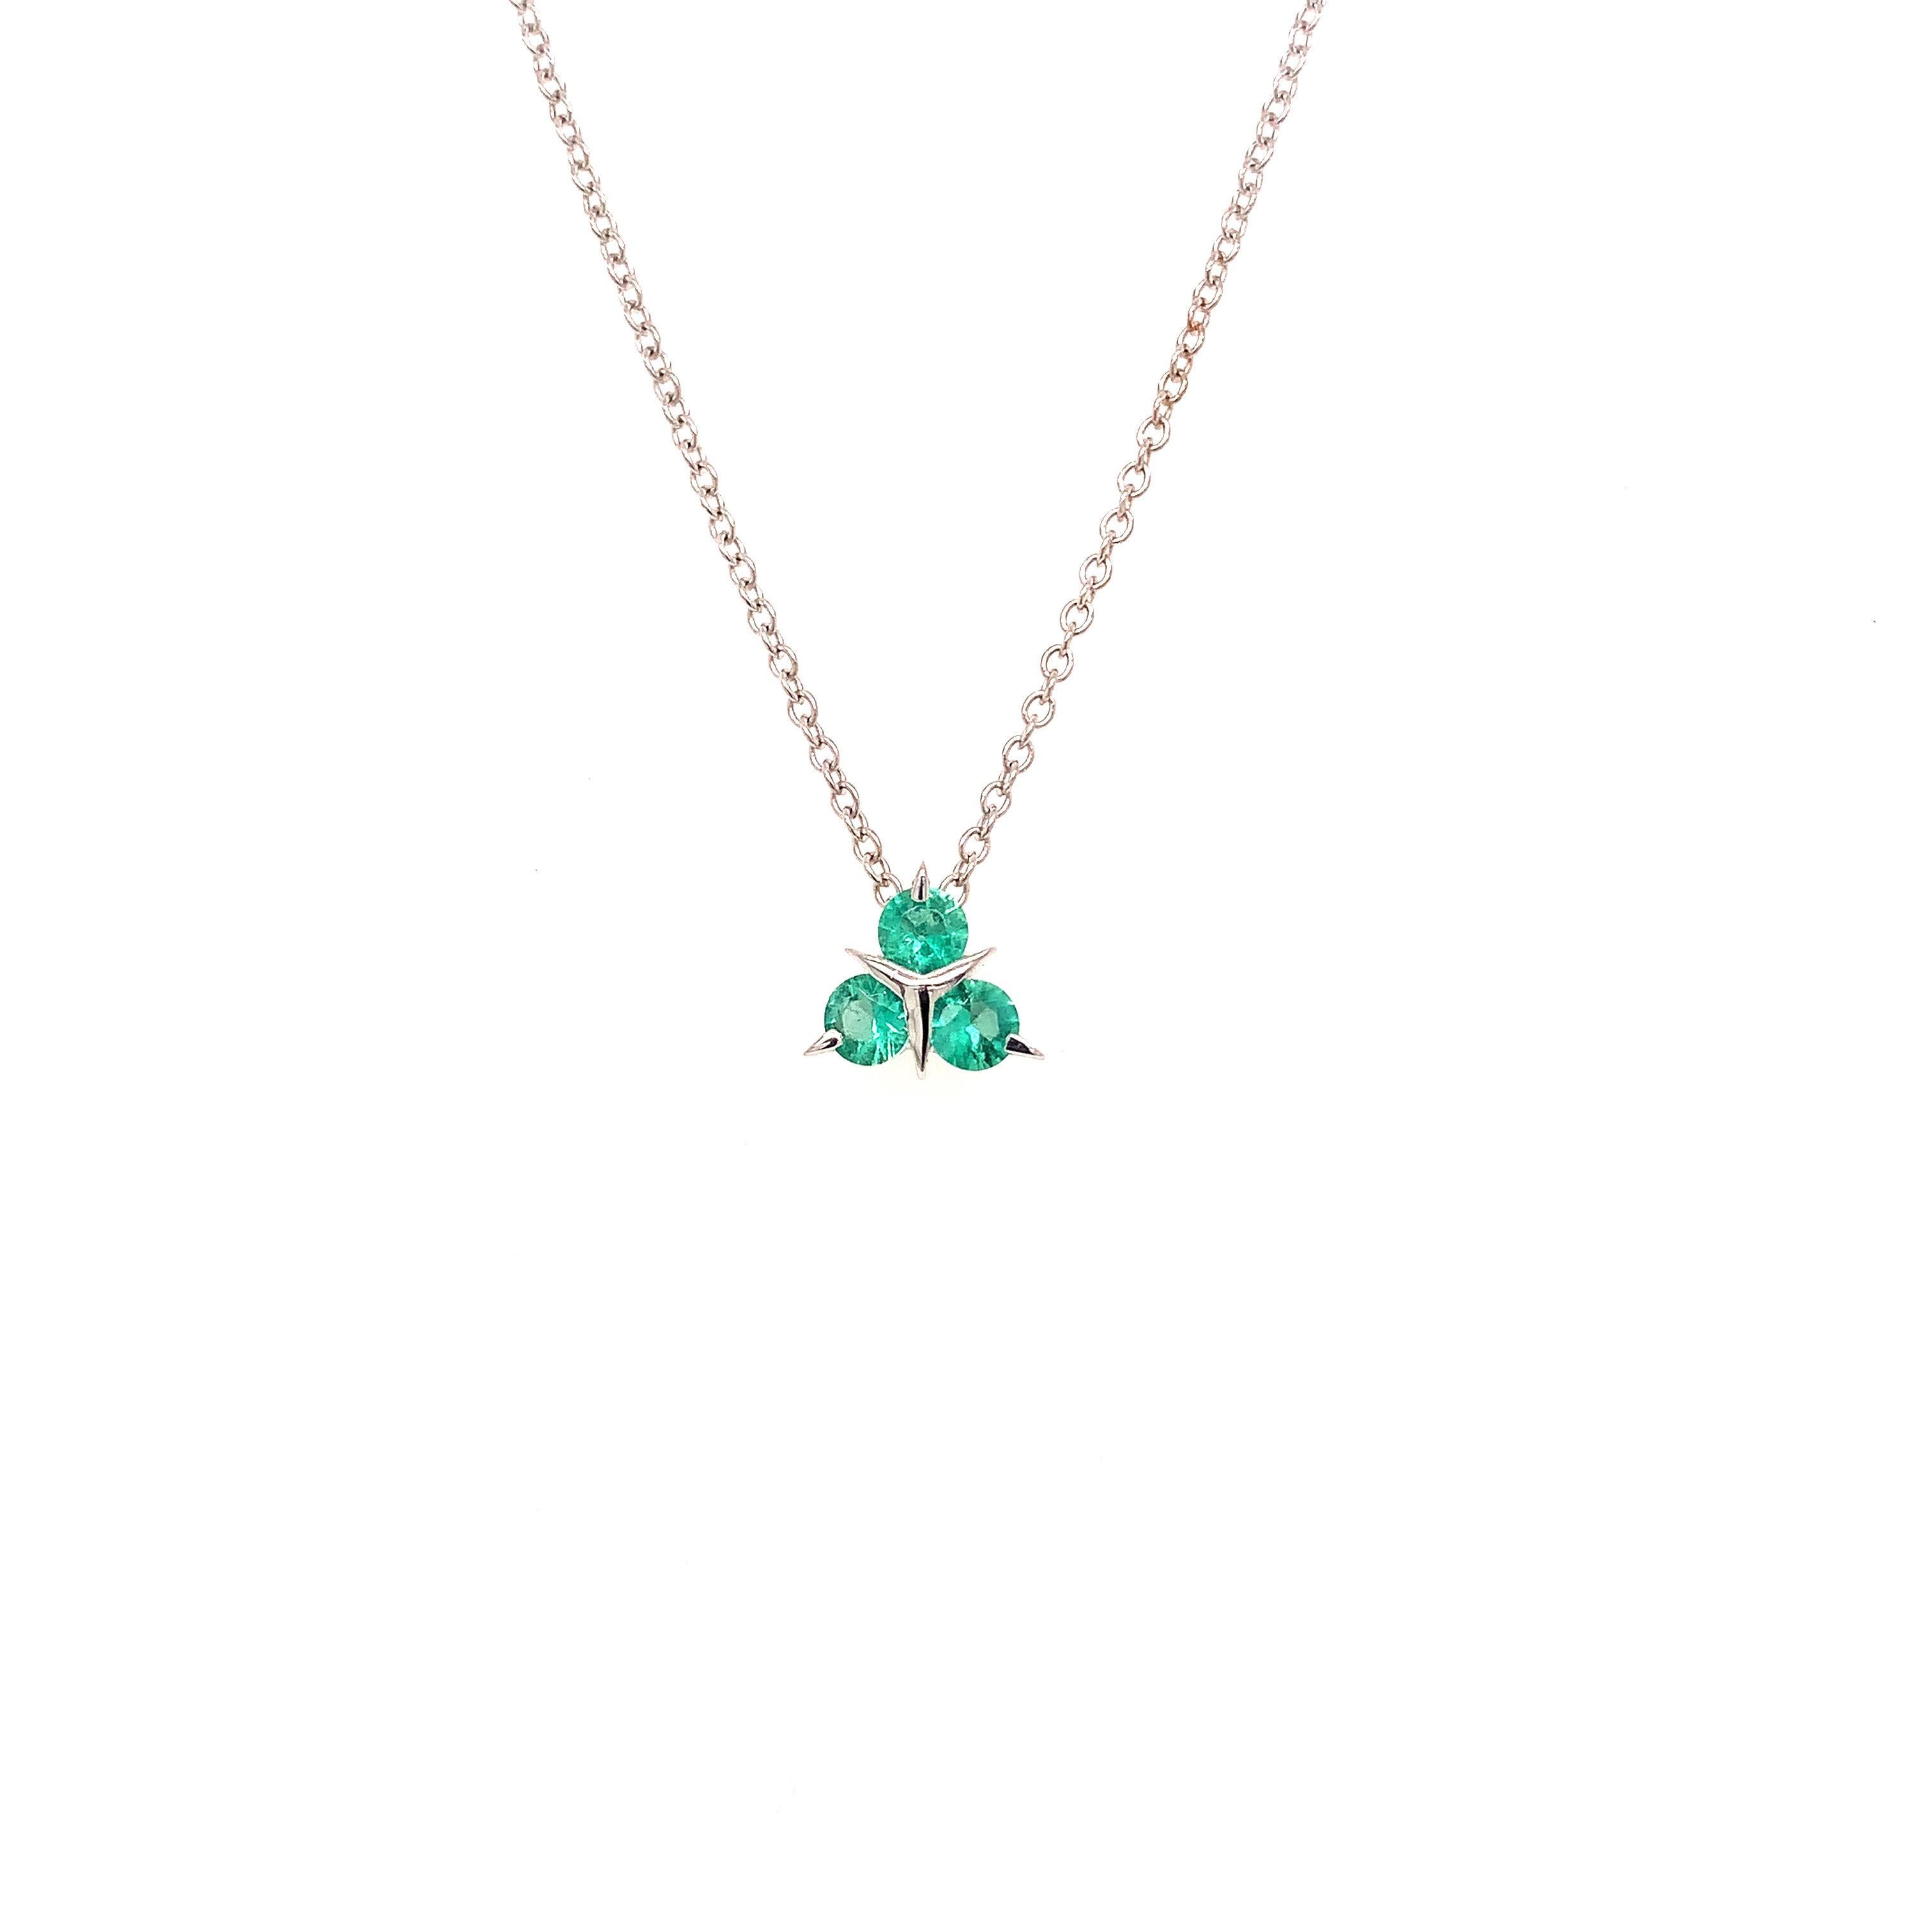 Round Cut 18 Karat White Gold Emerald Garavelli Pendant with Chain For Sale